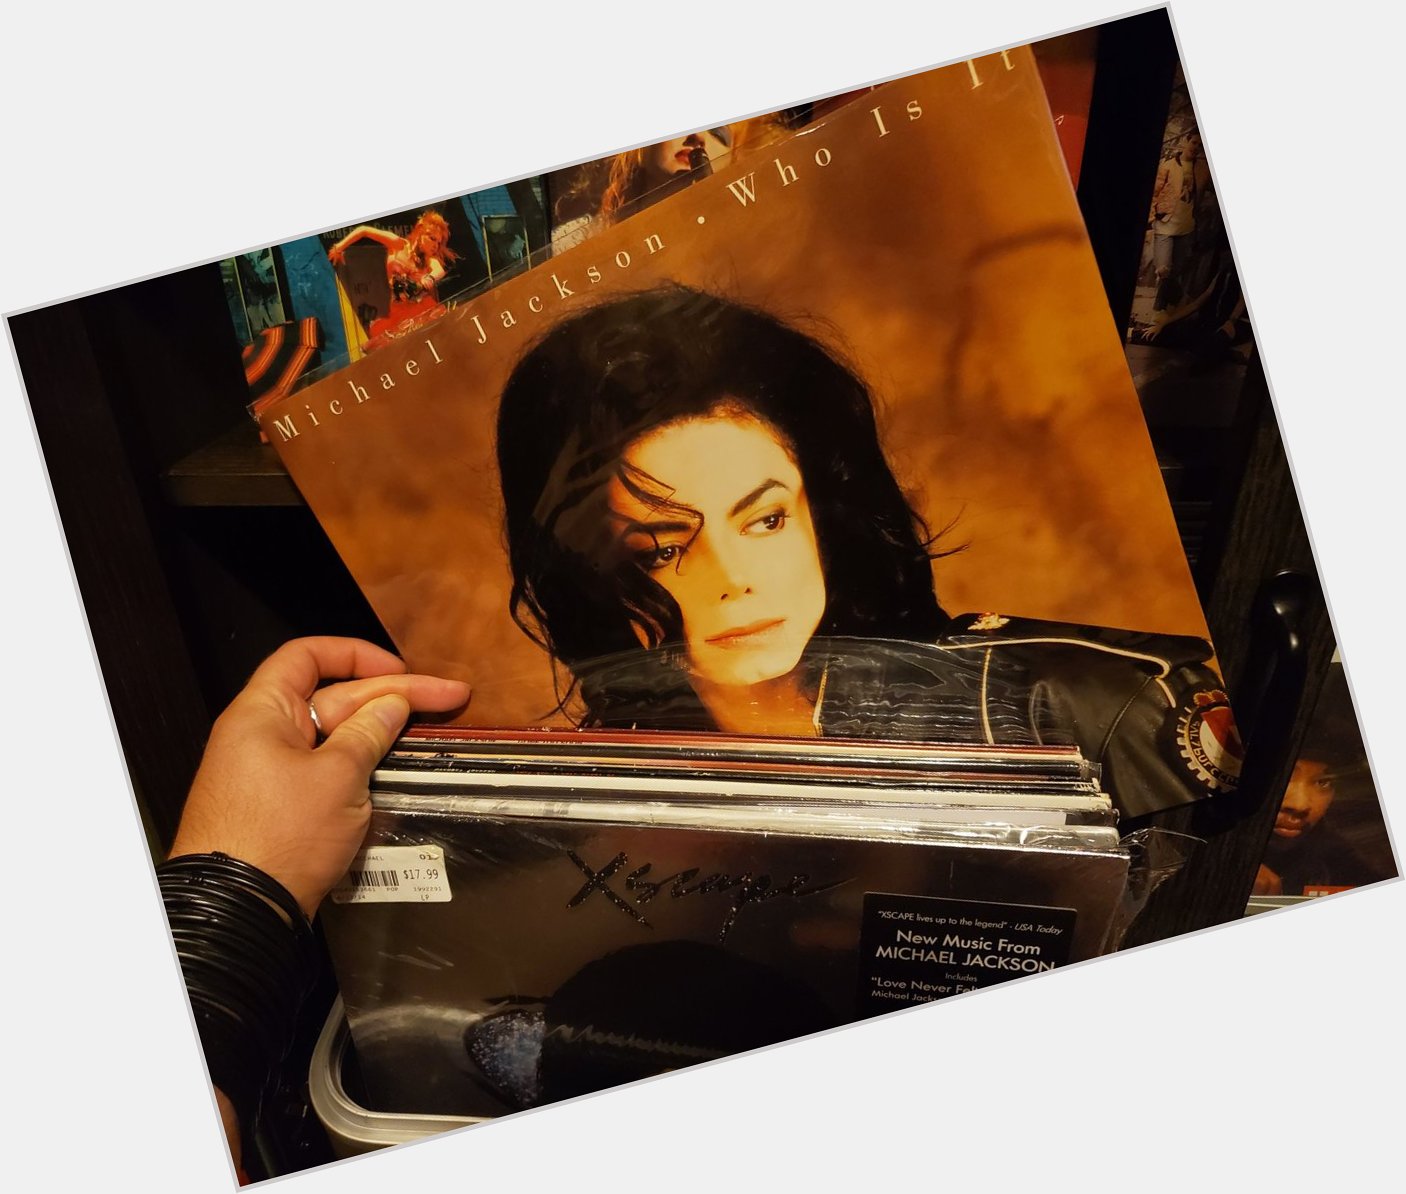 Happy Birthday Michael Jackson .
What\s your favorite MJ memory? 